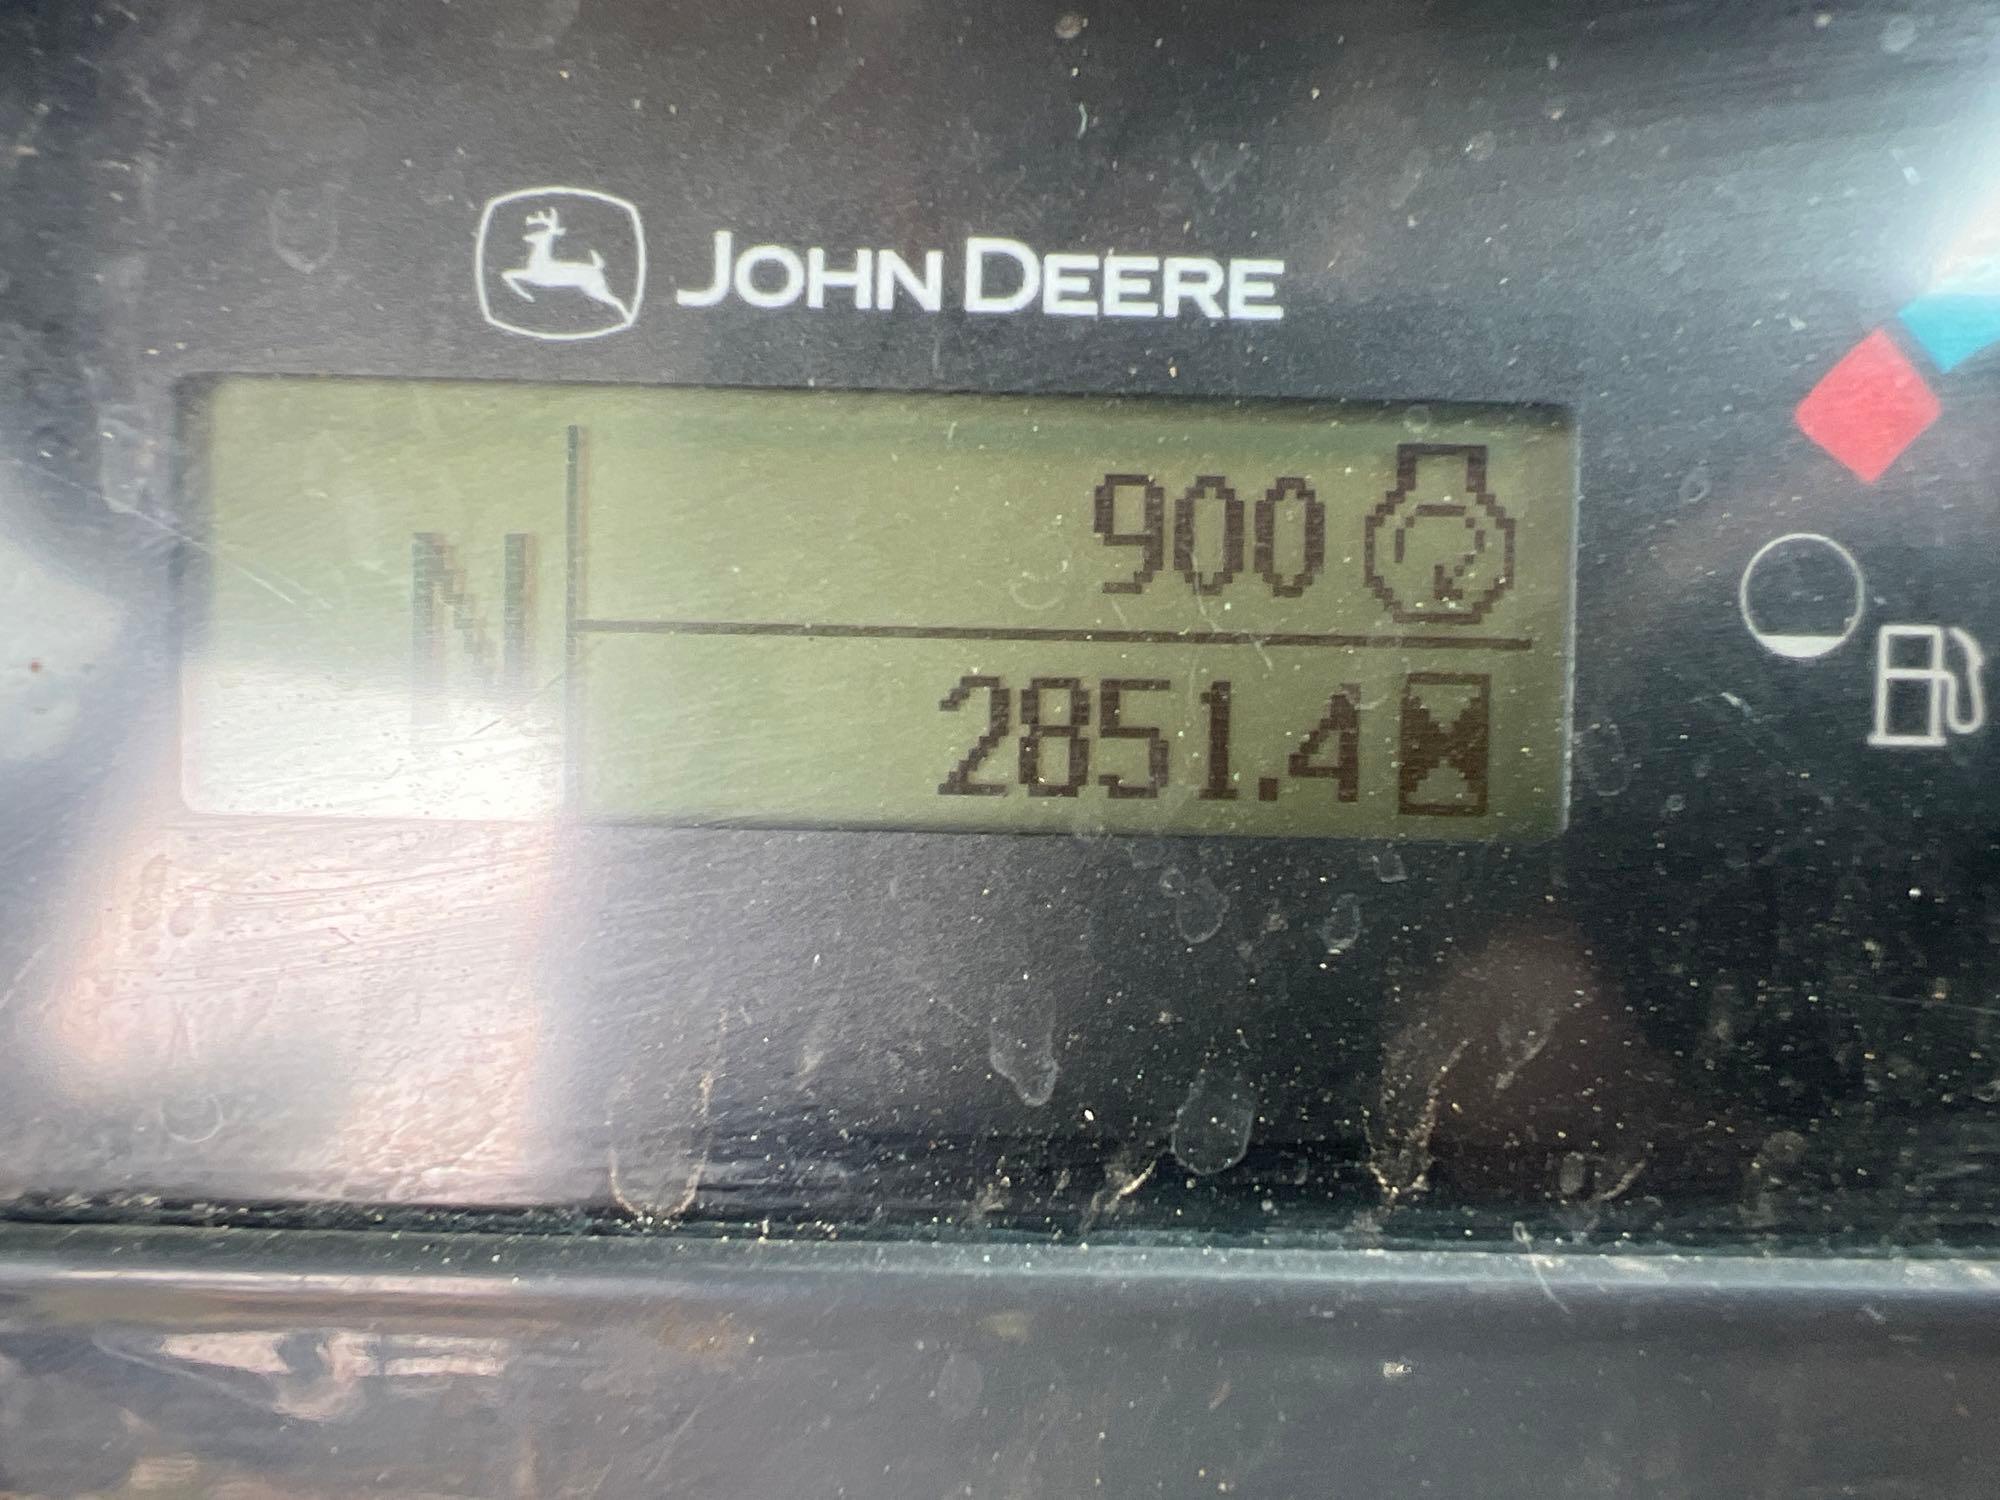 2018 JOHN DEERE 310L TRACTOR LOADER BACKHOE SN:322203 4x4, powered by John Deere diesel engine,